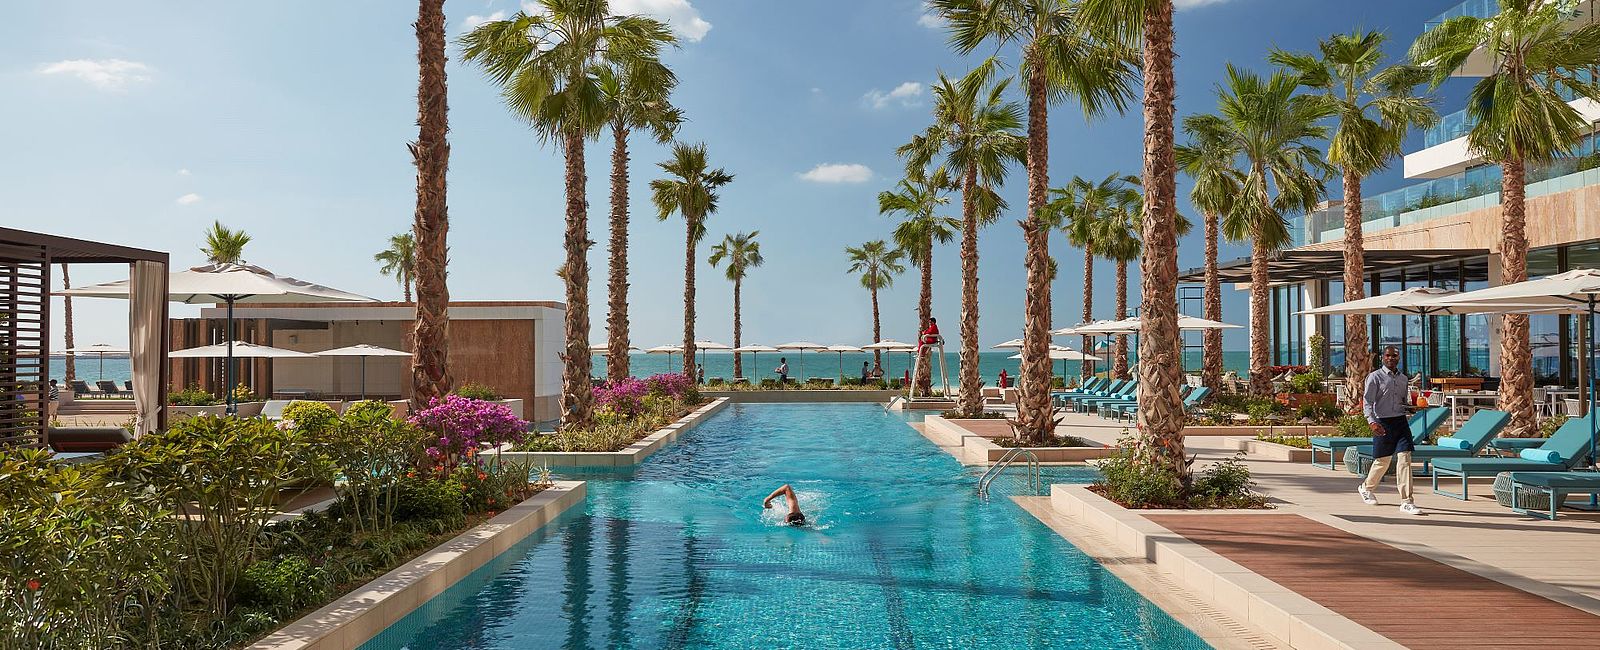 HOTEL ANGEBOTE
 "Dubai Dreaming" im Mandarin Oriental Jumeira 
